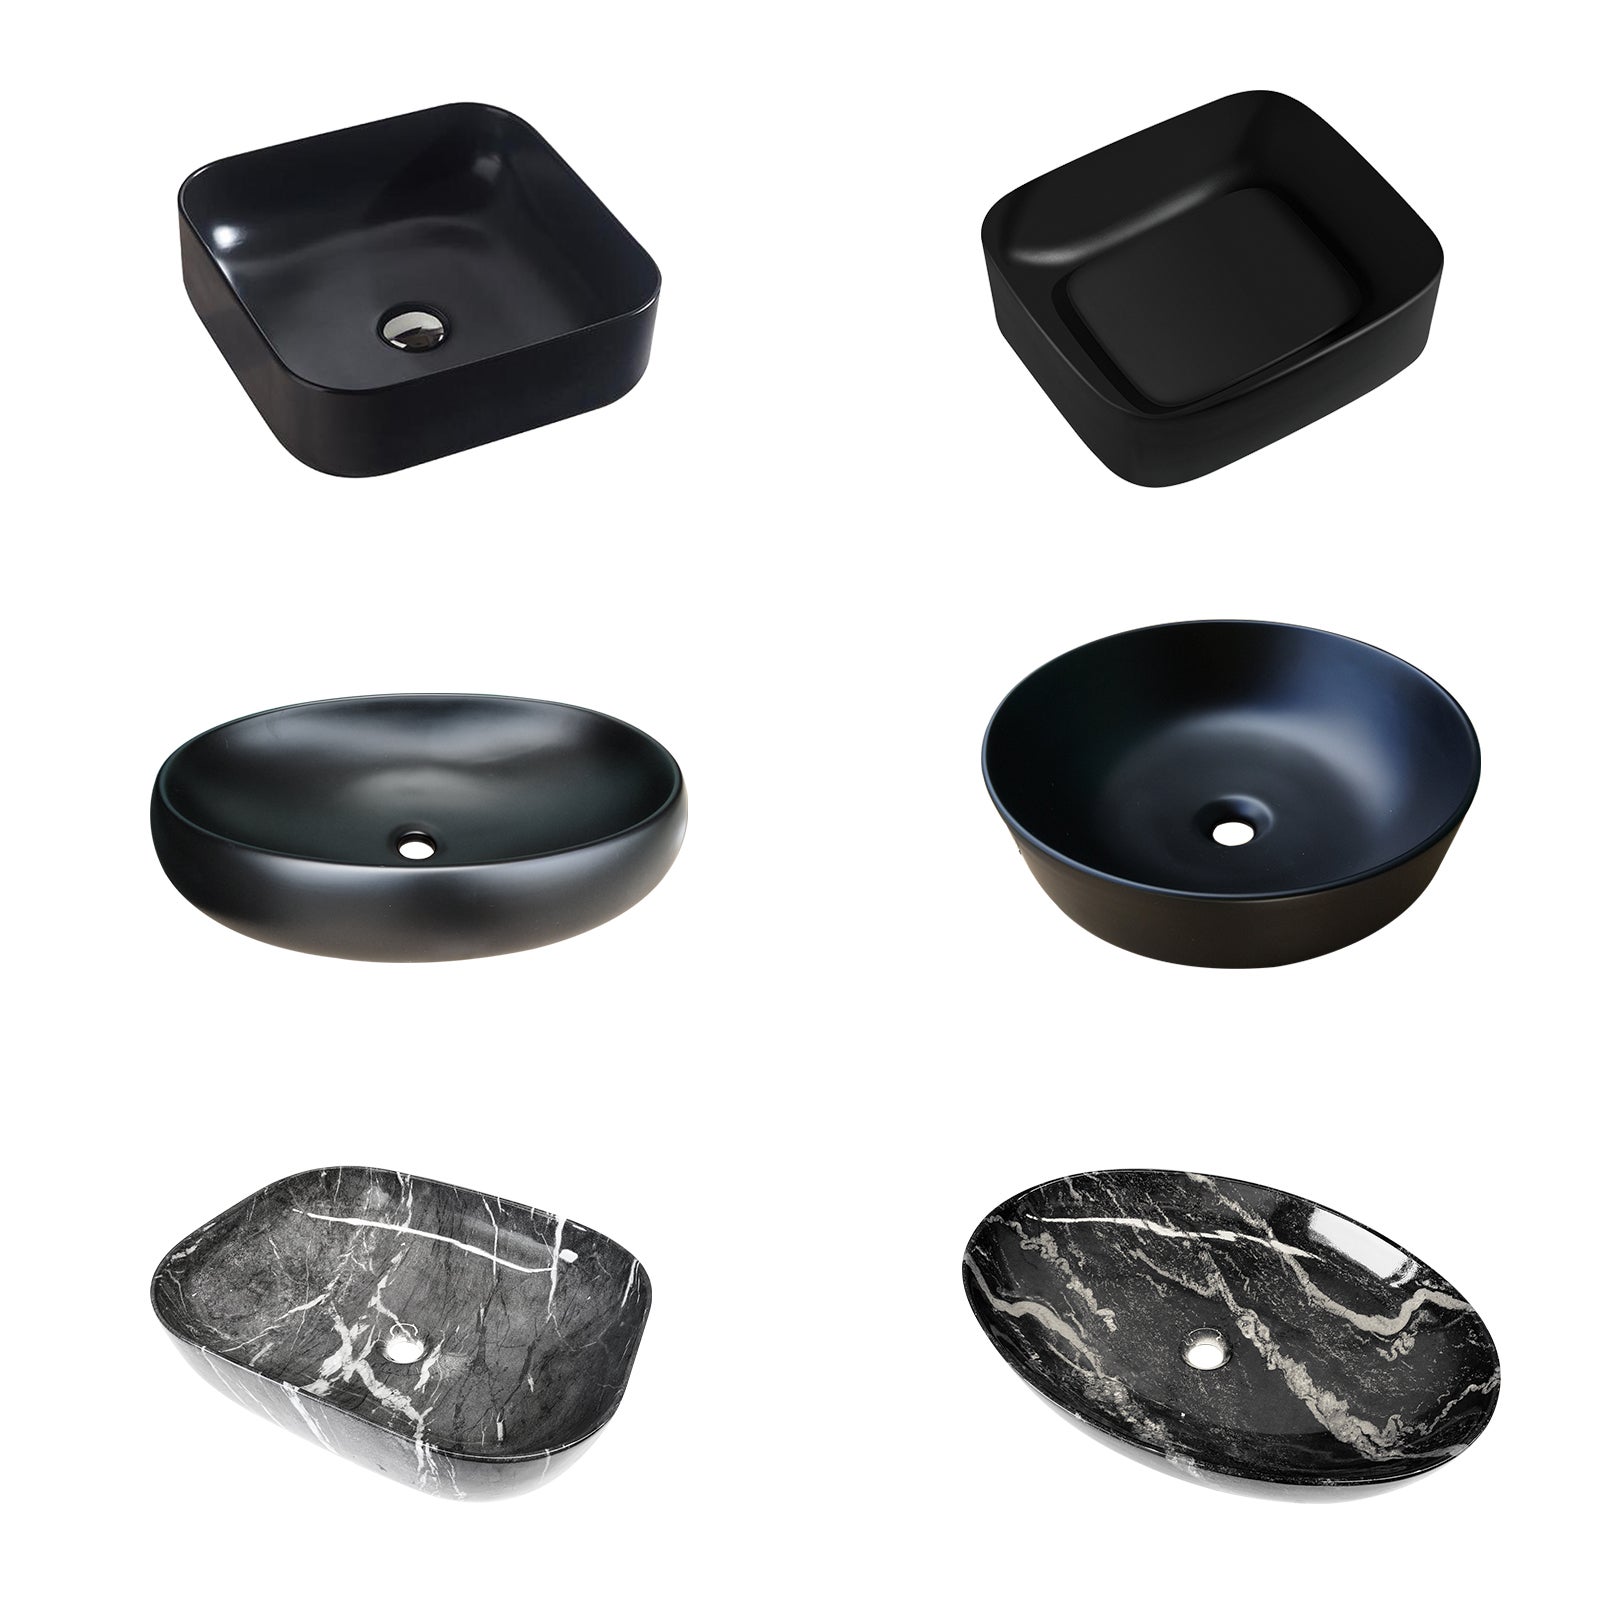 ACA Bathroom Ceramic Basin Sink Bowl Oval Square Round Above Counter Top Black